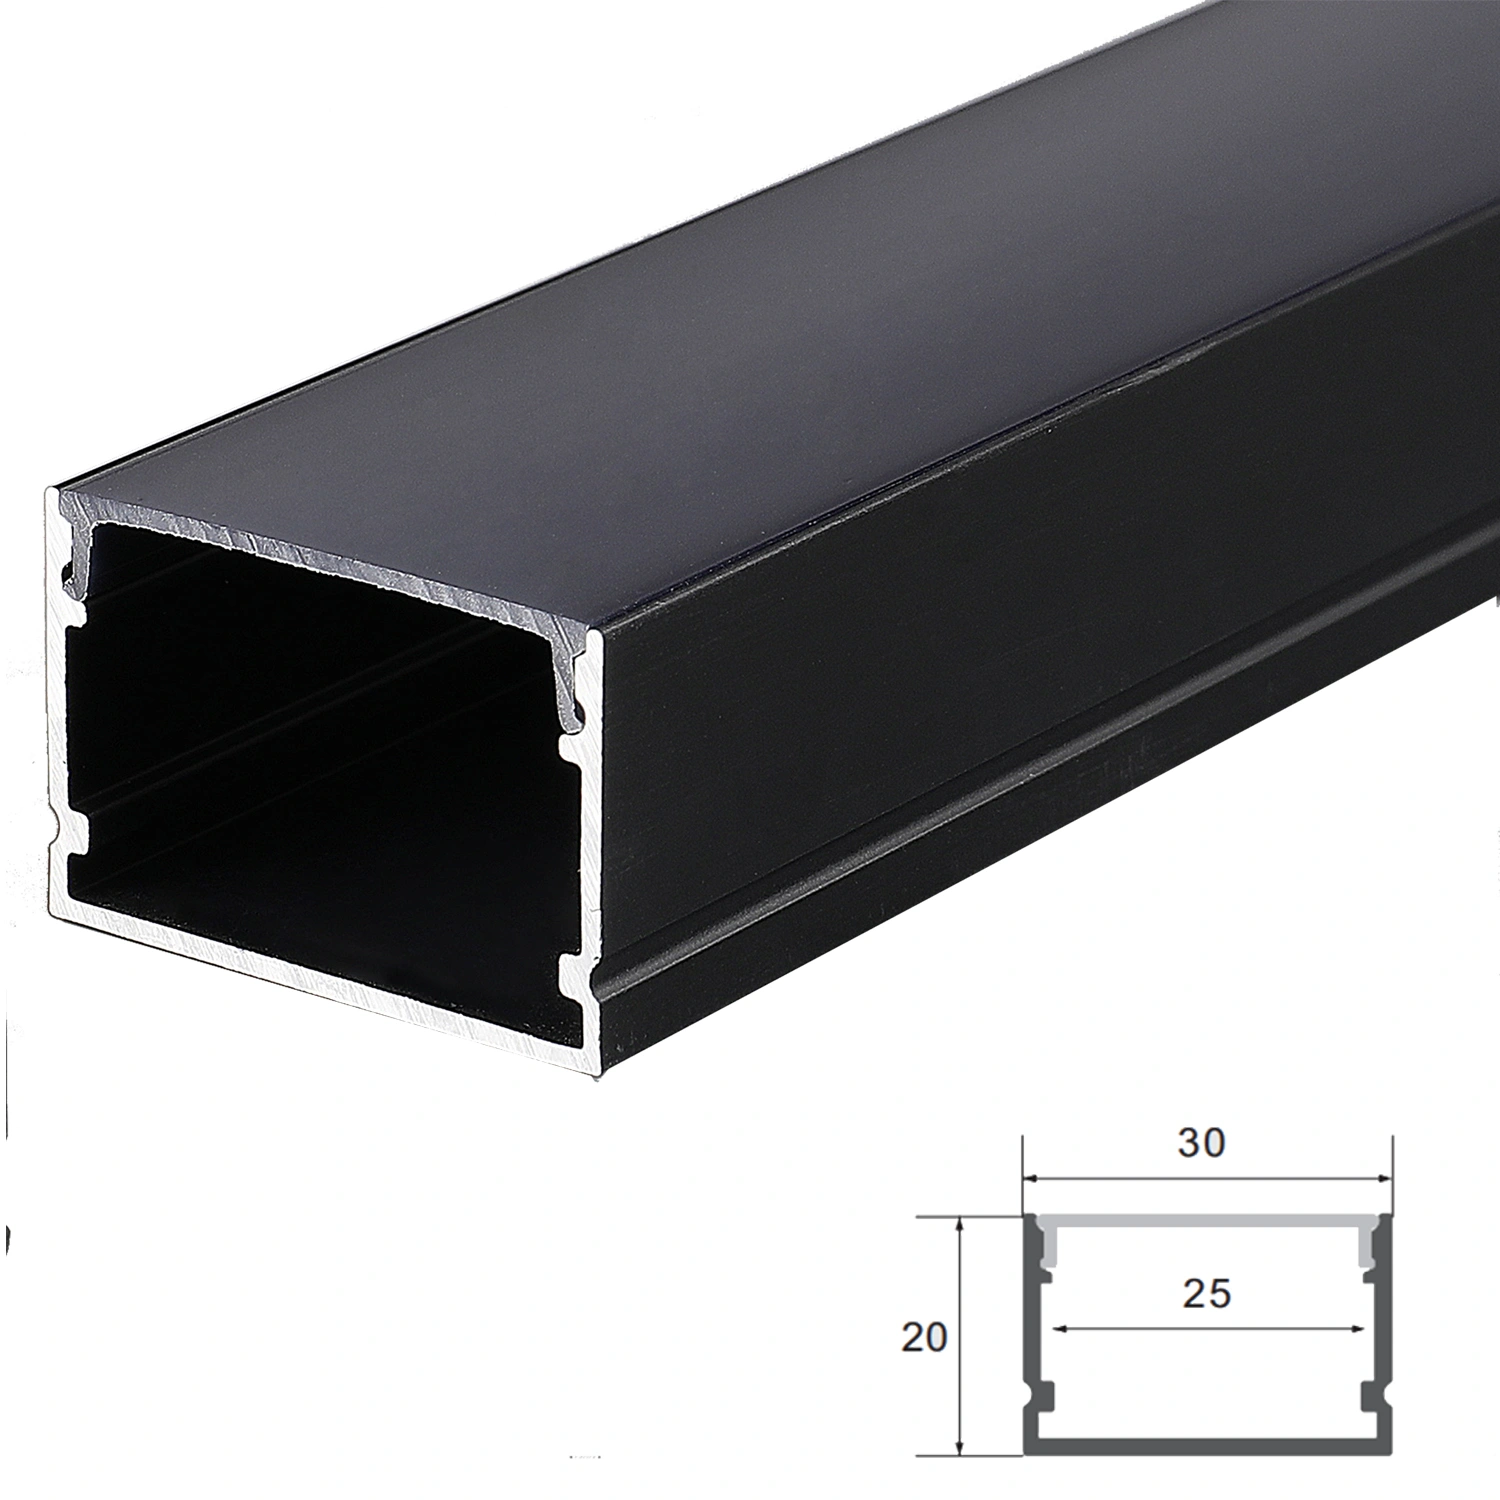 LED Diffuser Channel Aluminum Profiles 30x20mm